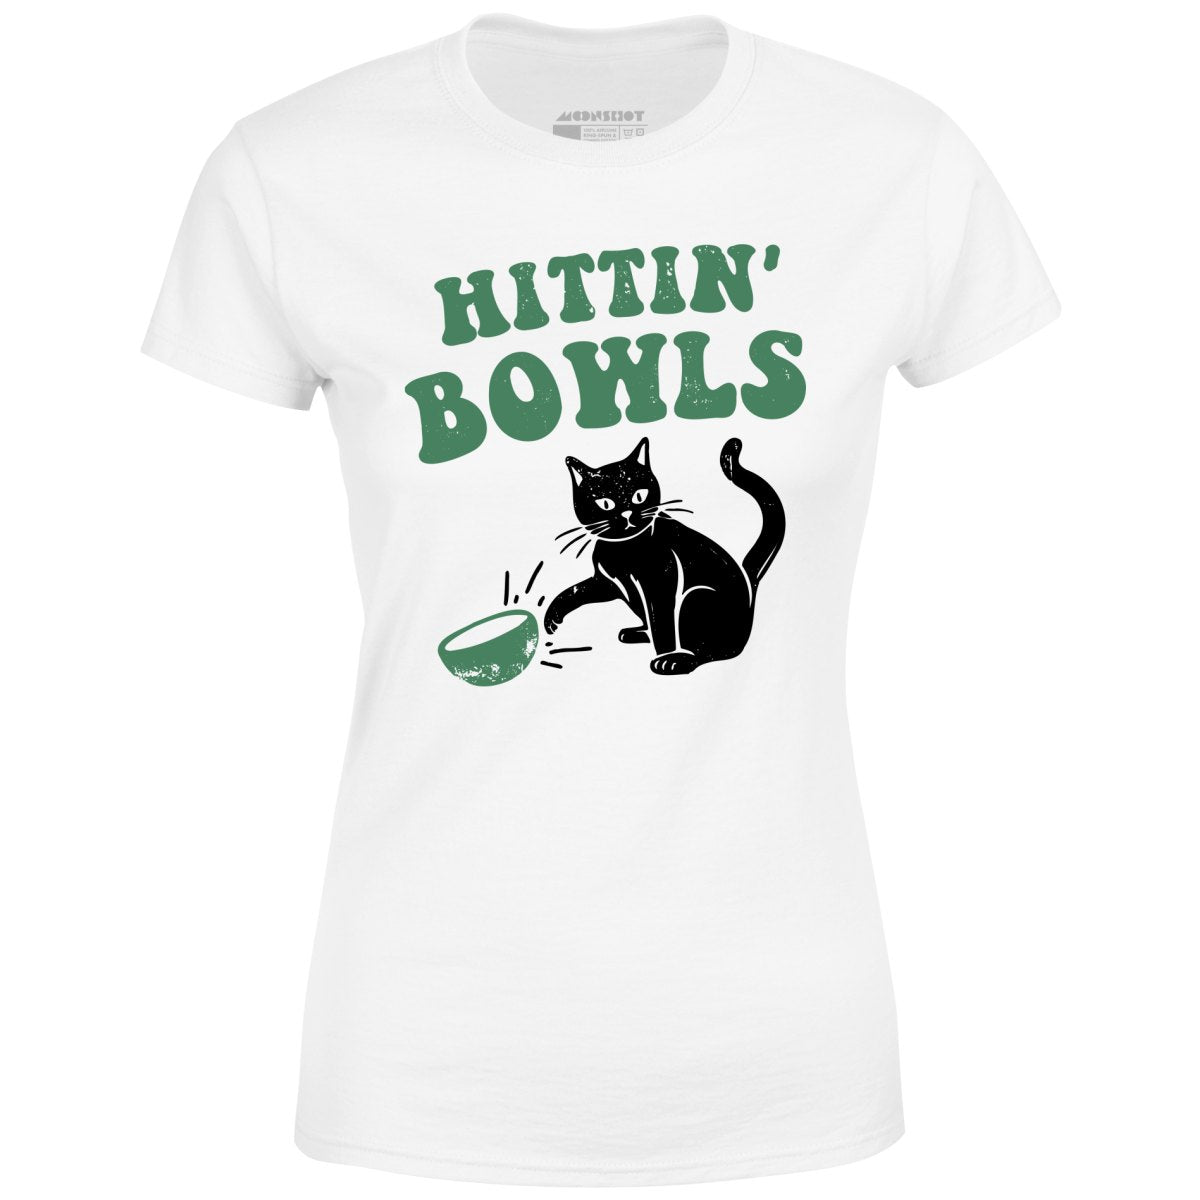 Hittin' Bowls - Women's T-Shirt